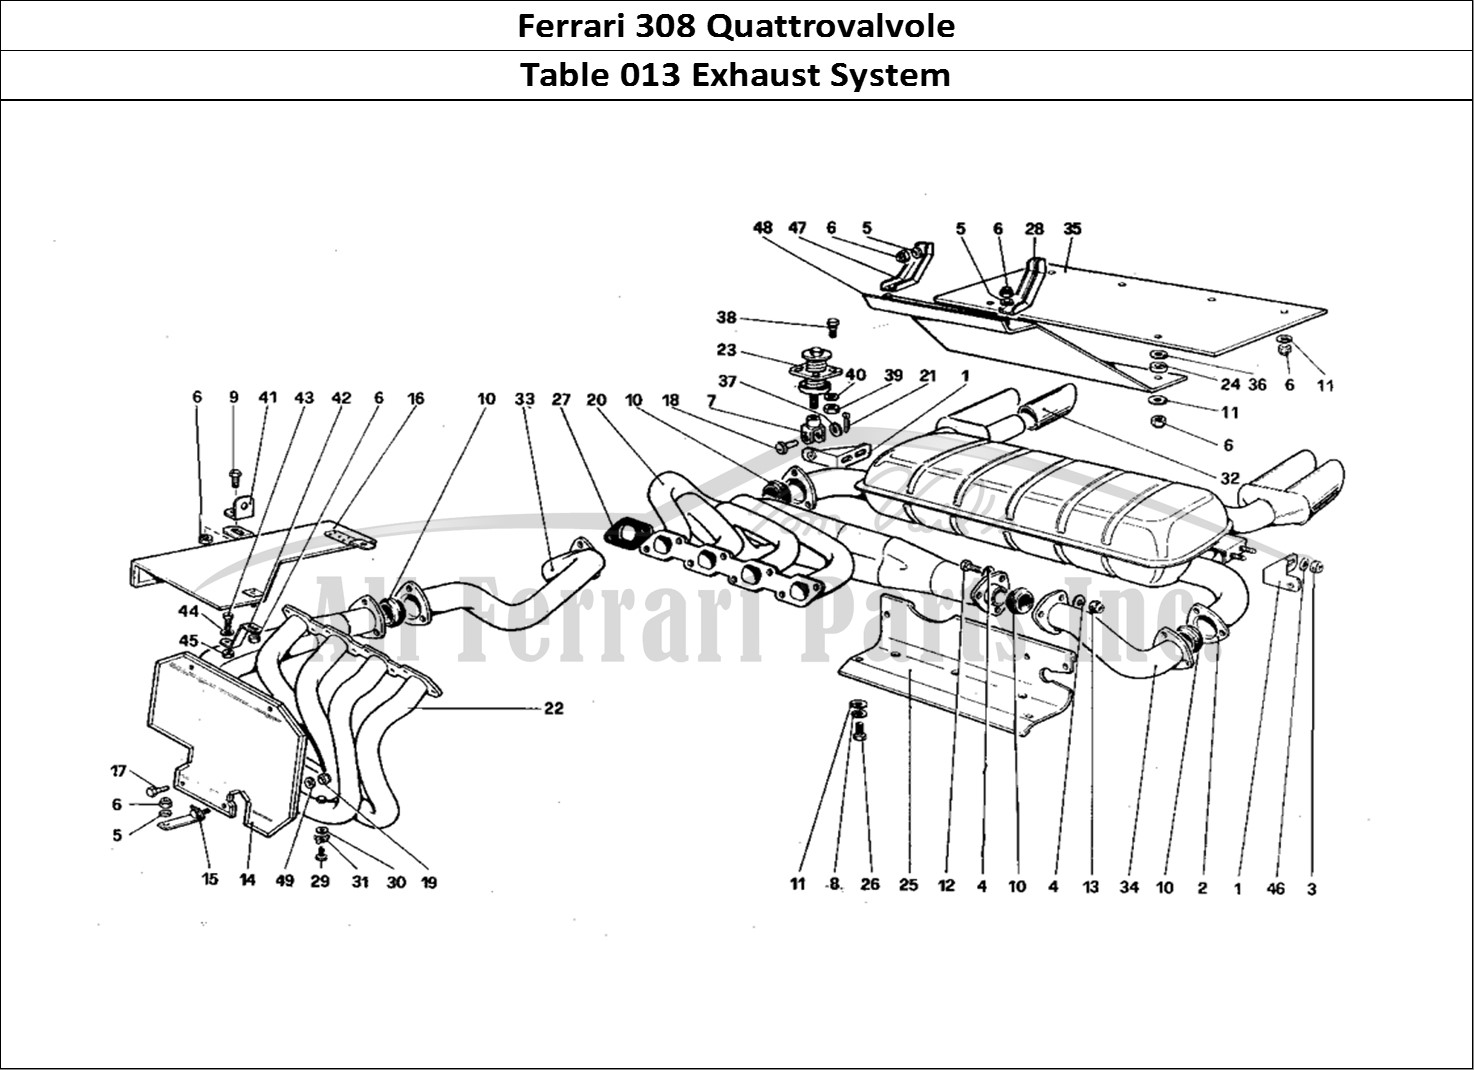 Ferrari Parts Ferrari 308 Quattrovalvole (1985) Page 013 Exhaust System